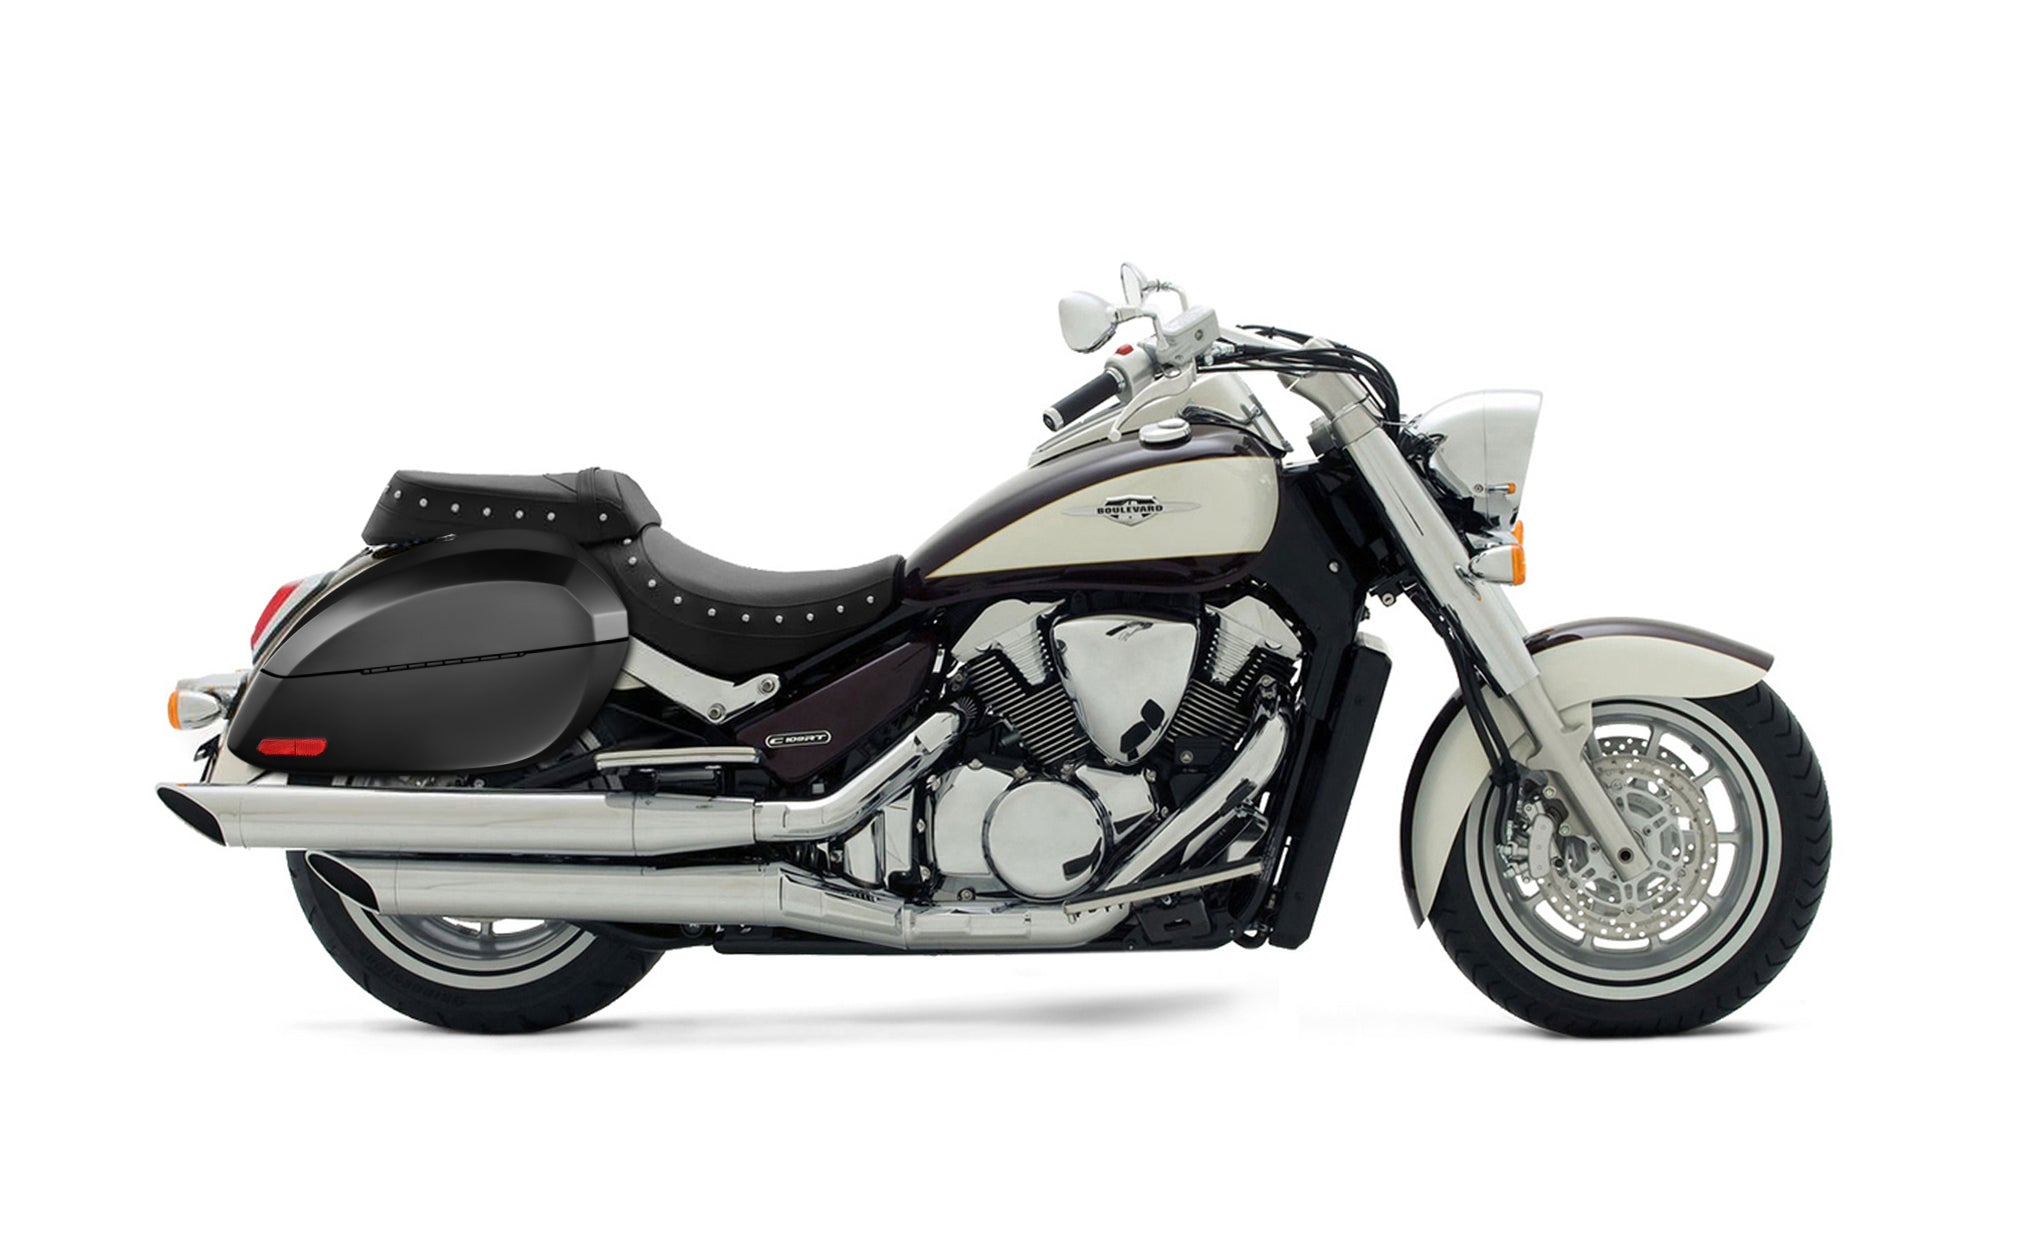 Viking Phantom Large Suzuki Boulevard C109 Matte Motorcycle Hard Saddlebags Engineering Excellence with Bag on Bike @expand